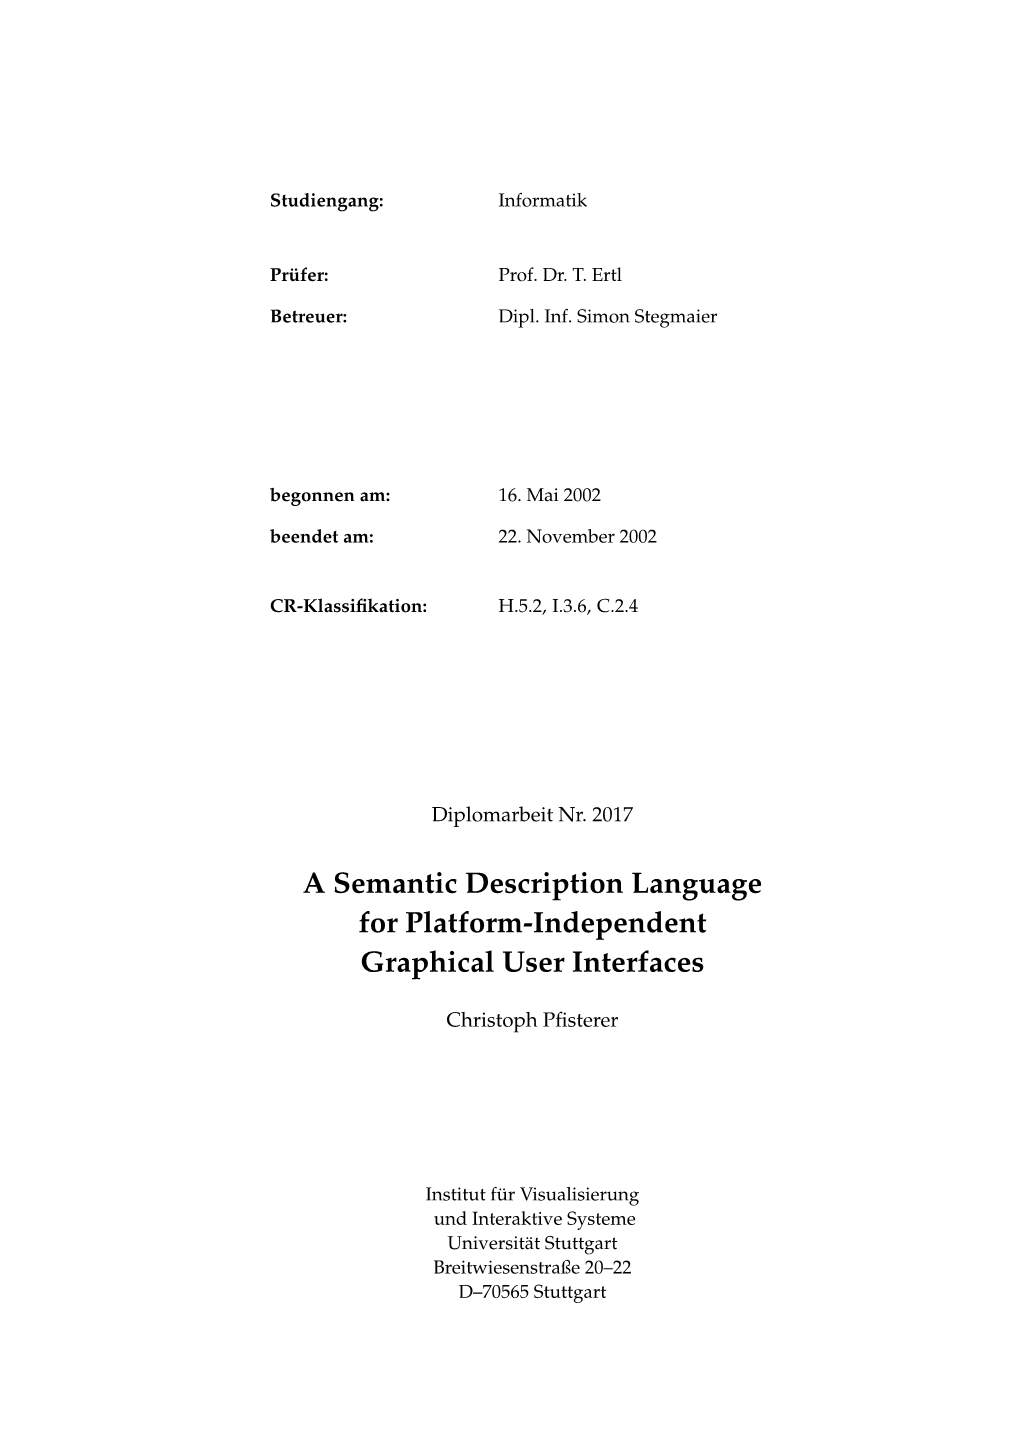 A Semantic Description Language for Platform-Independent Graphical User Interfaces